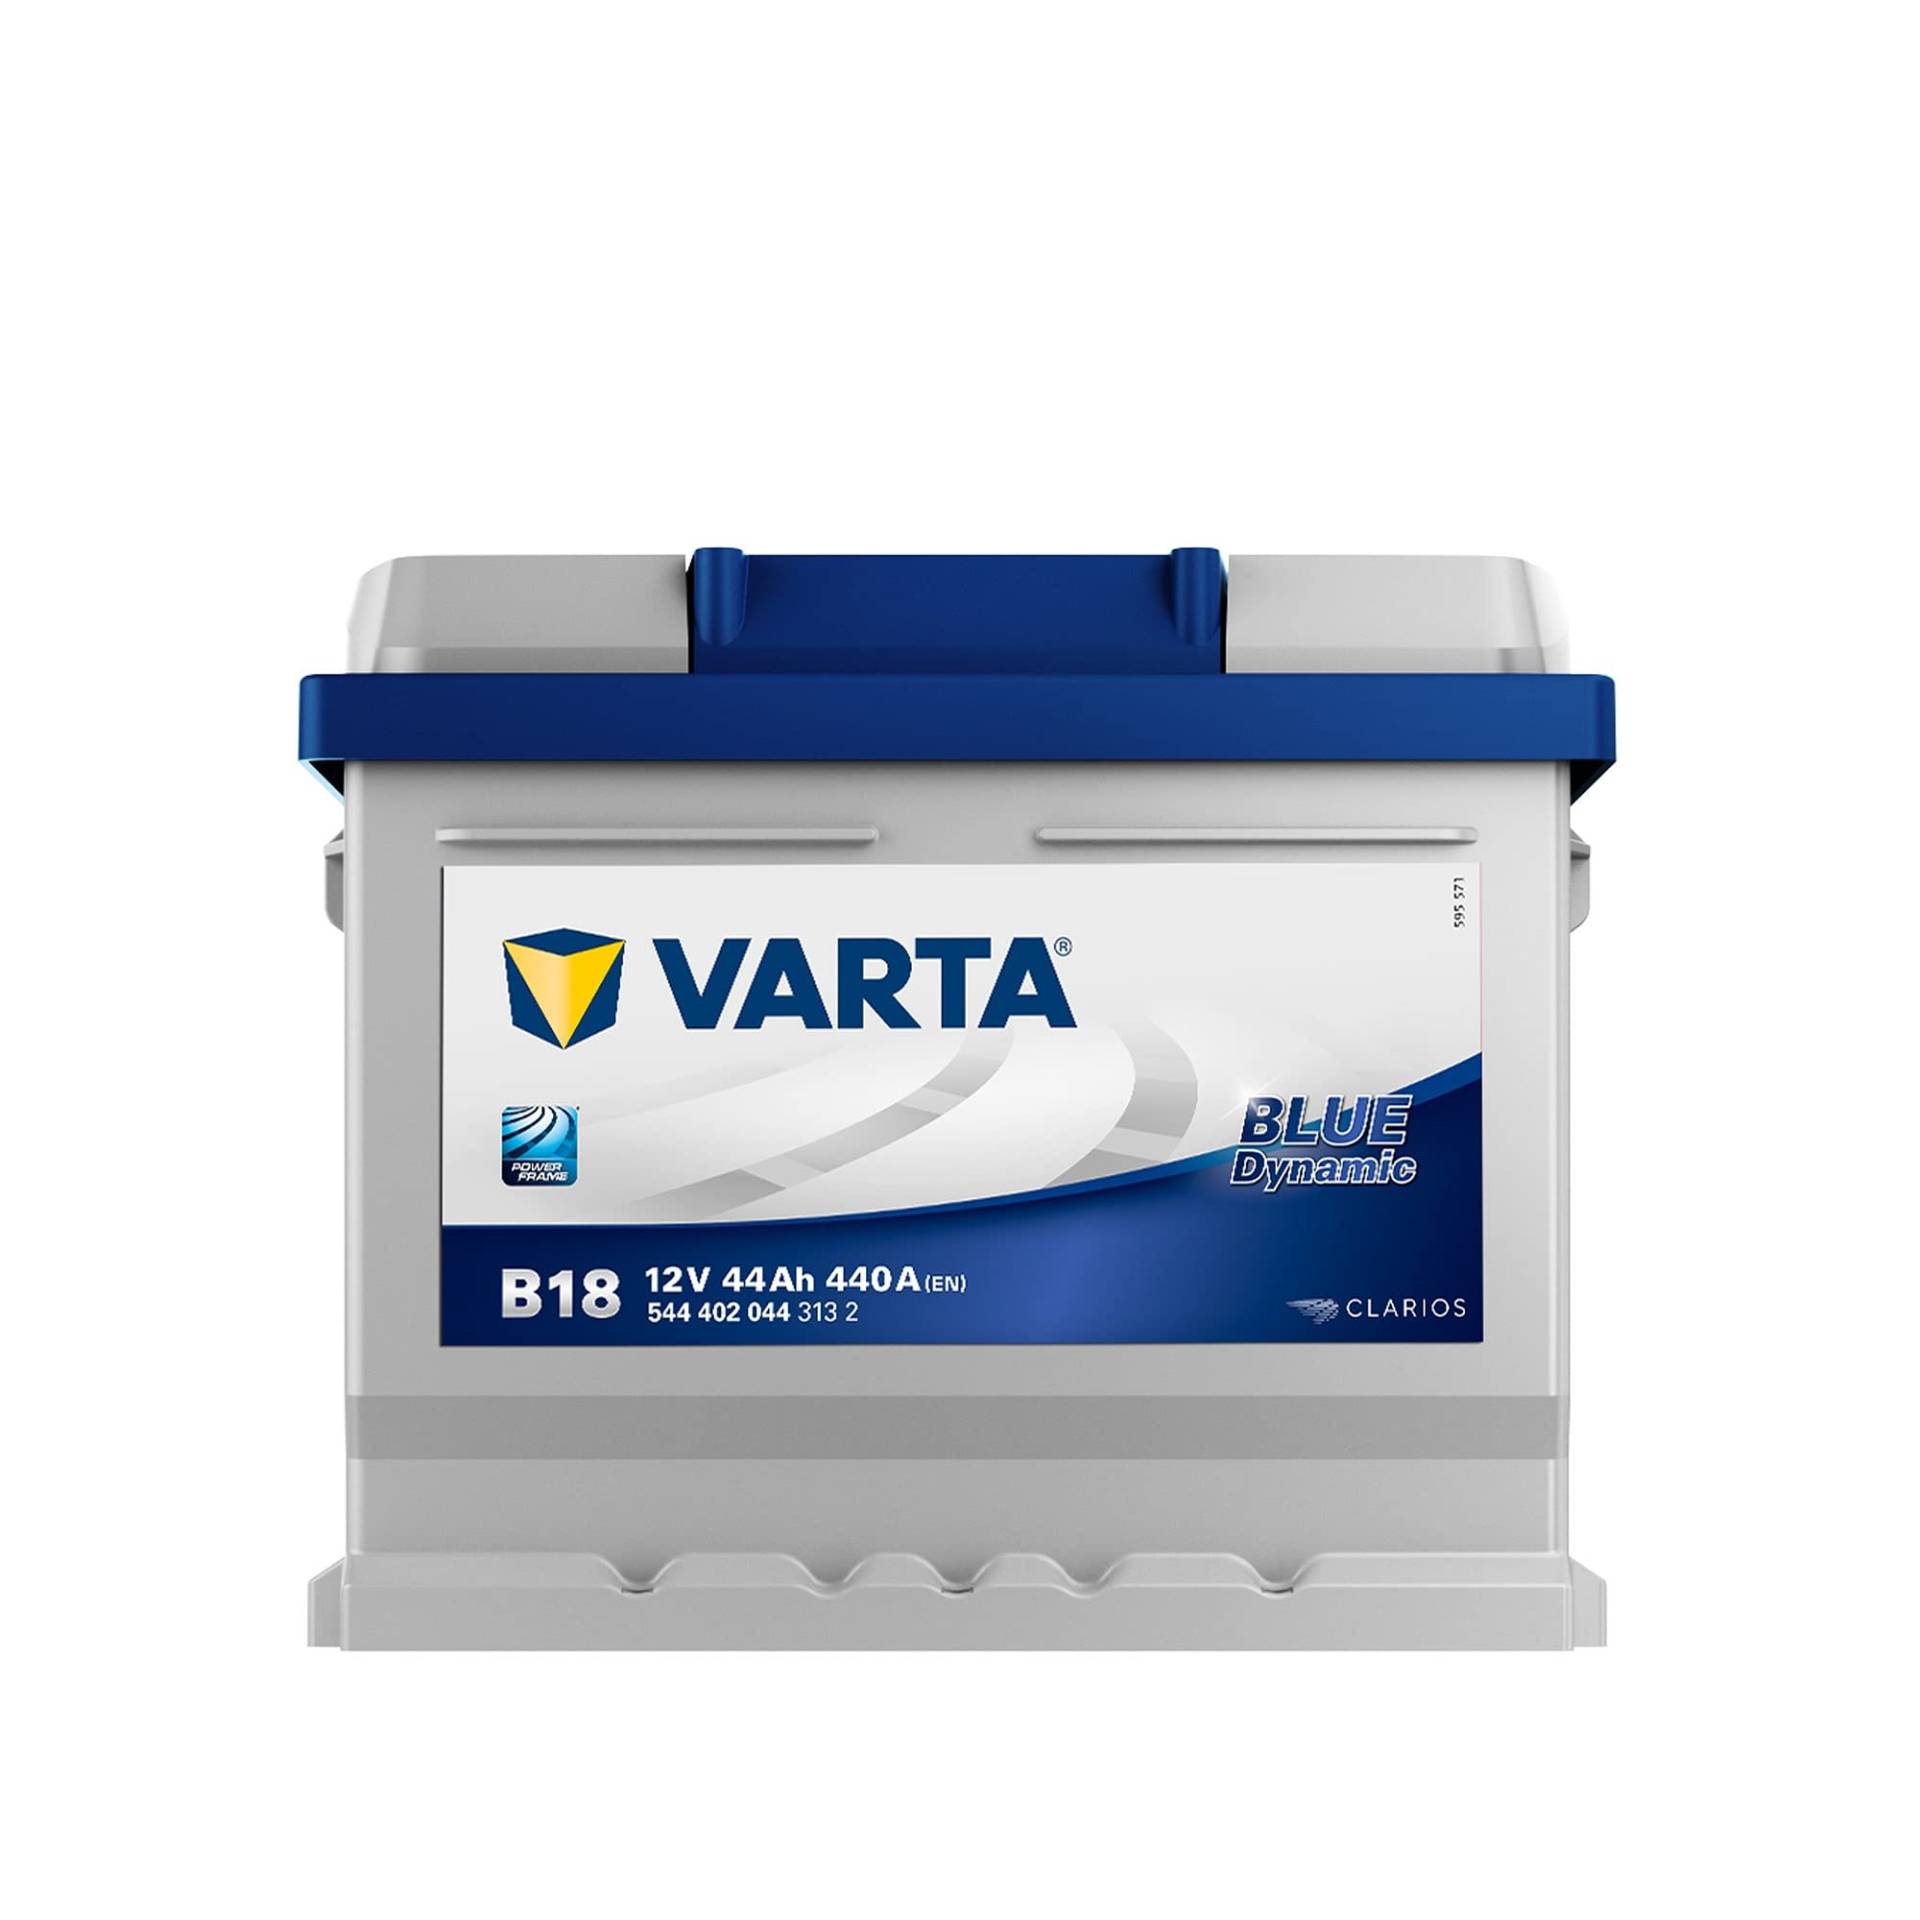 Varta B18 Autobatterie 58344 Blue Dynamic, 12V, 44 Ah, 440 A von Varta